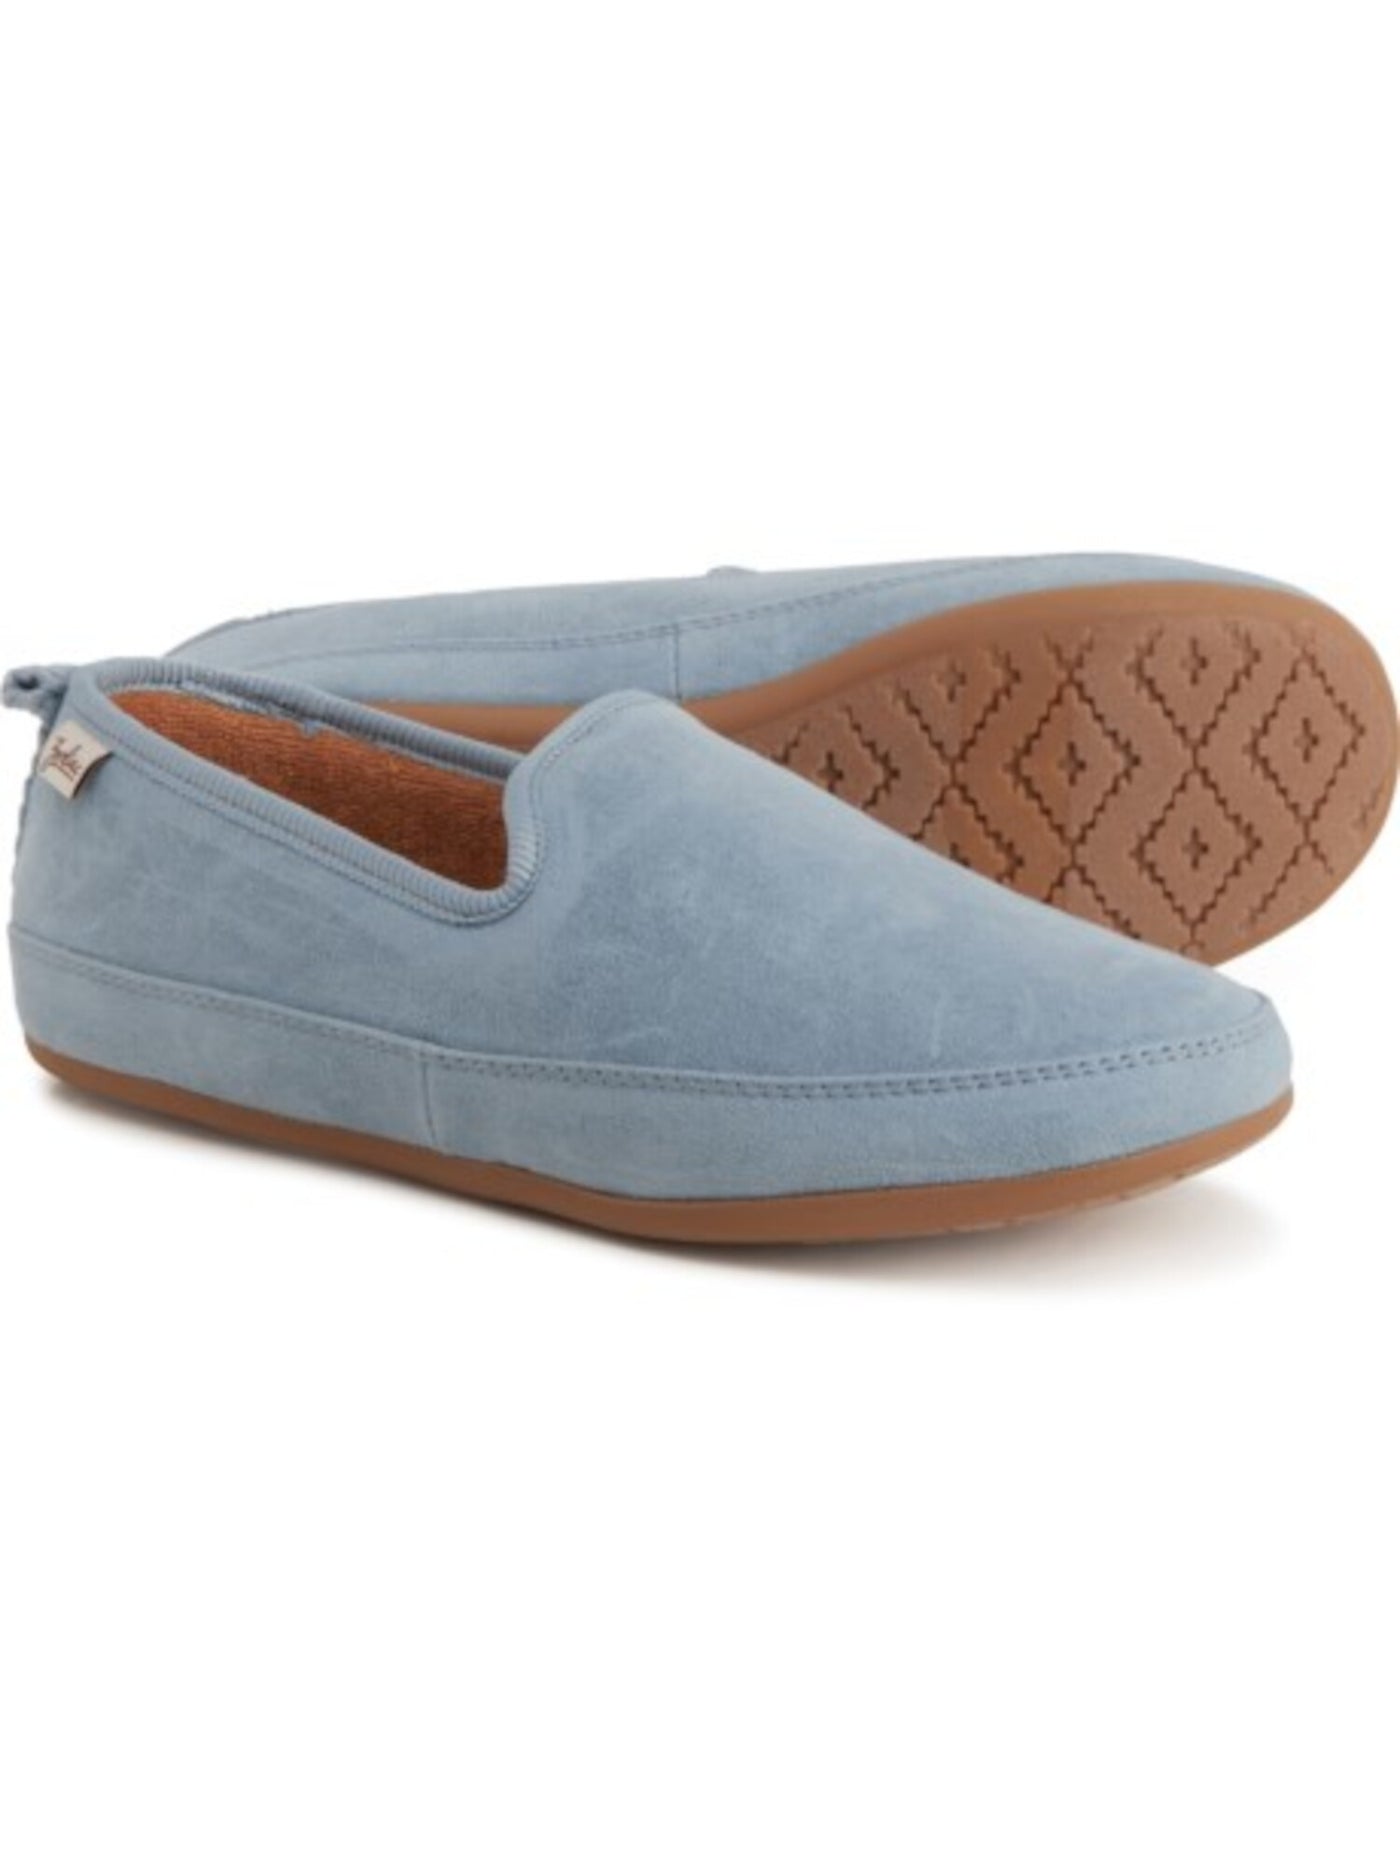 ZODIAC Womens Light Blue Cushioned Comfort Paradise Round Toe Slip On Slippers Shoes 10 M